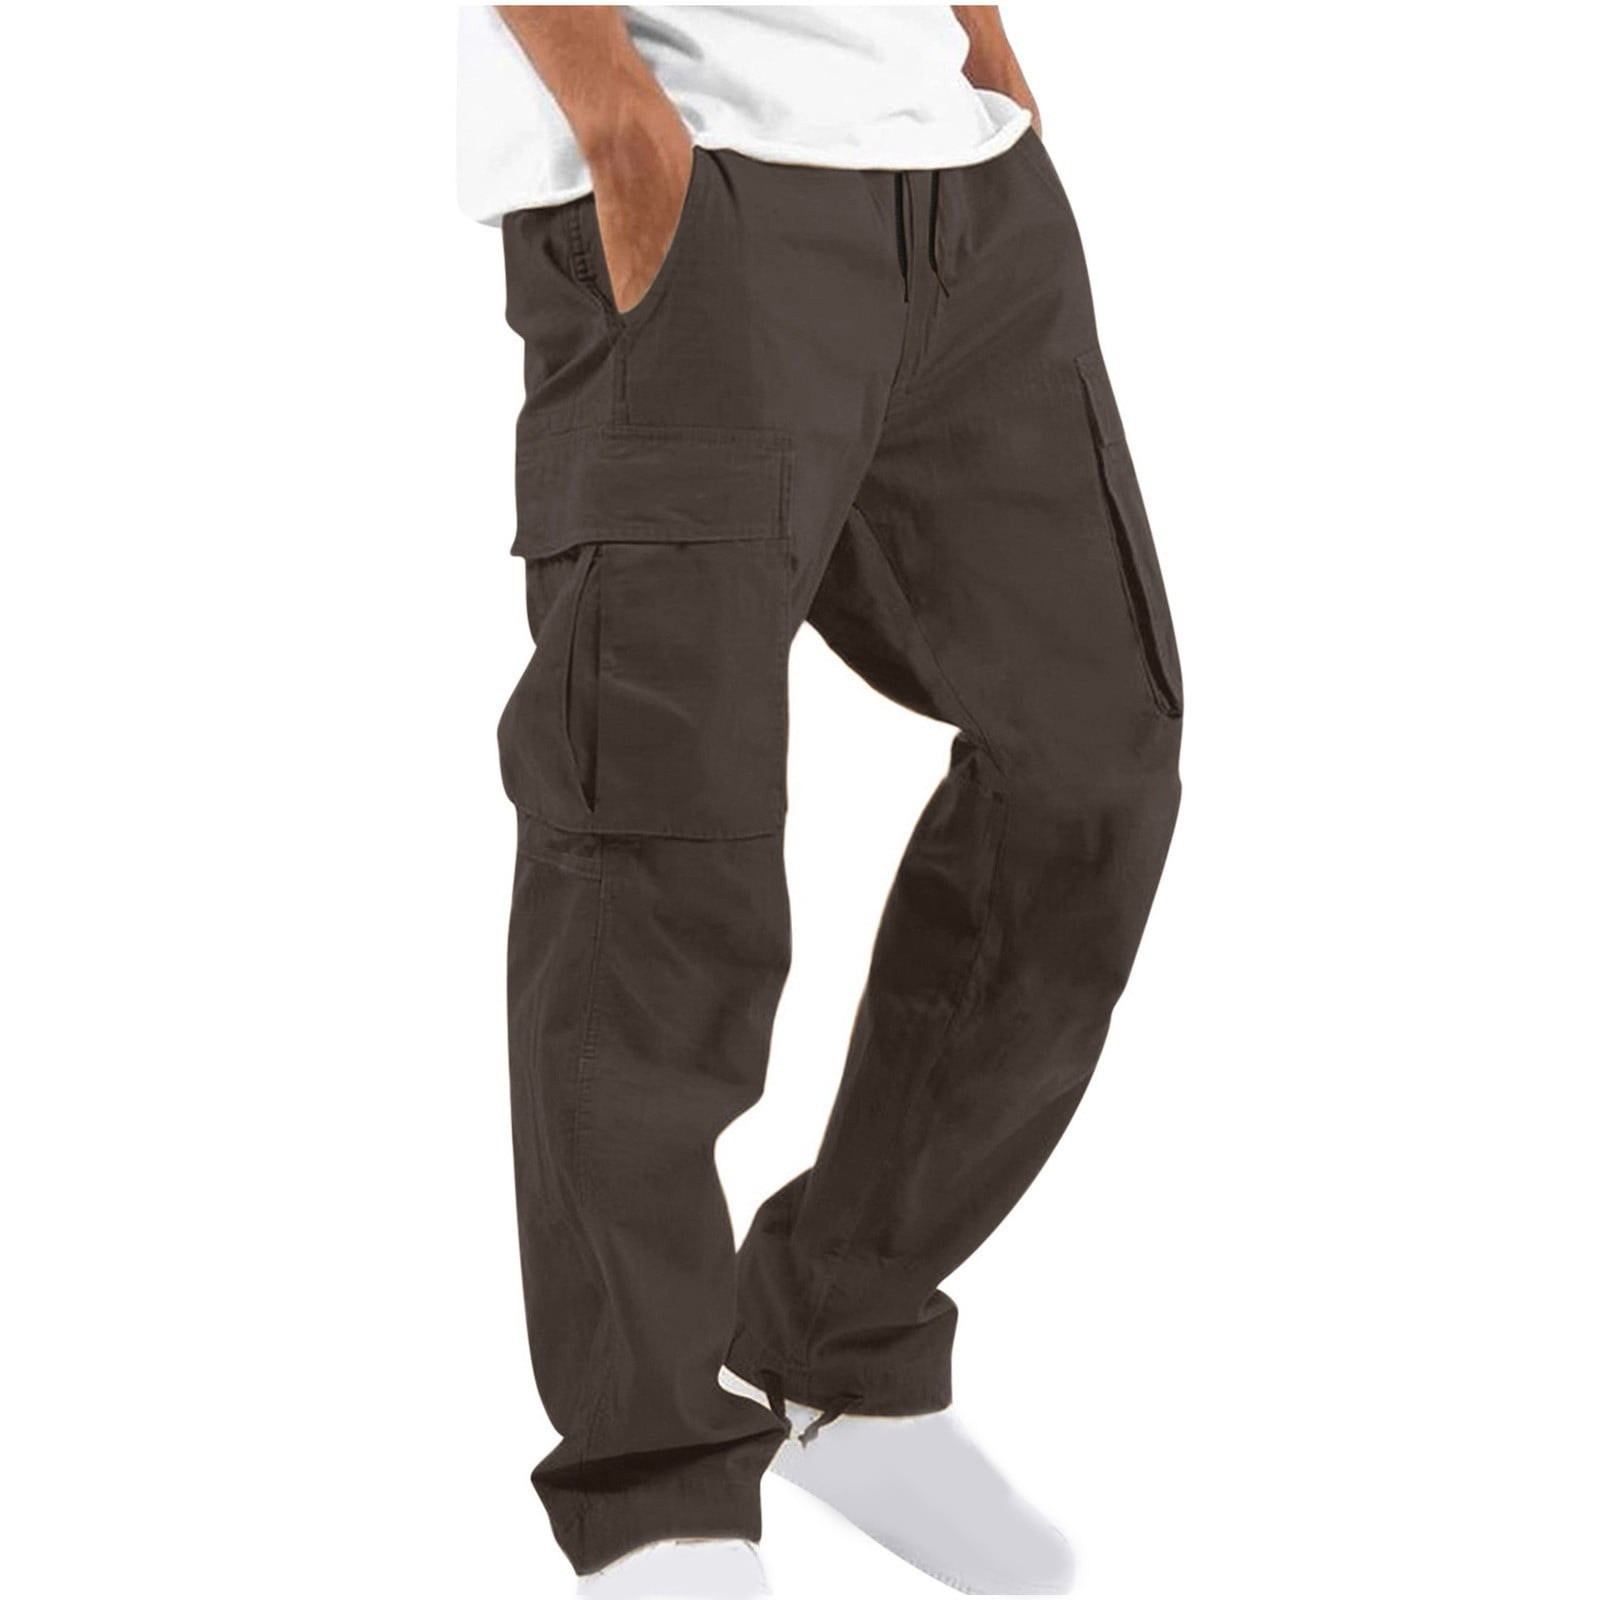 New York & Company Women's Pants Black Cotton Blend Size 2 Average | eBay